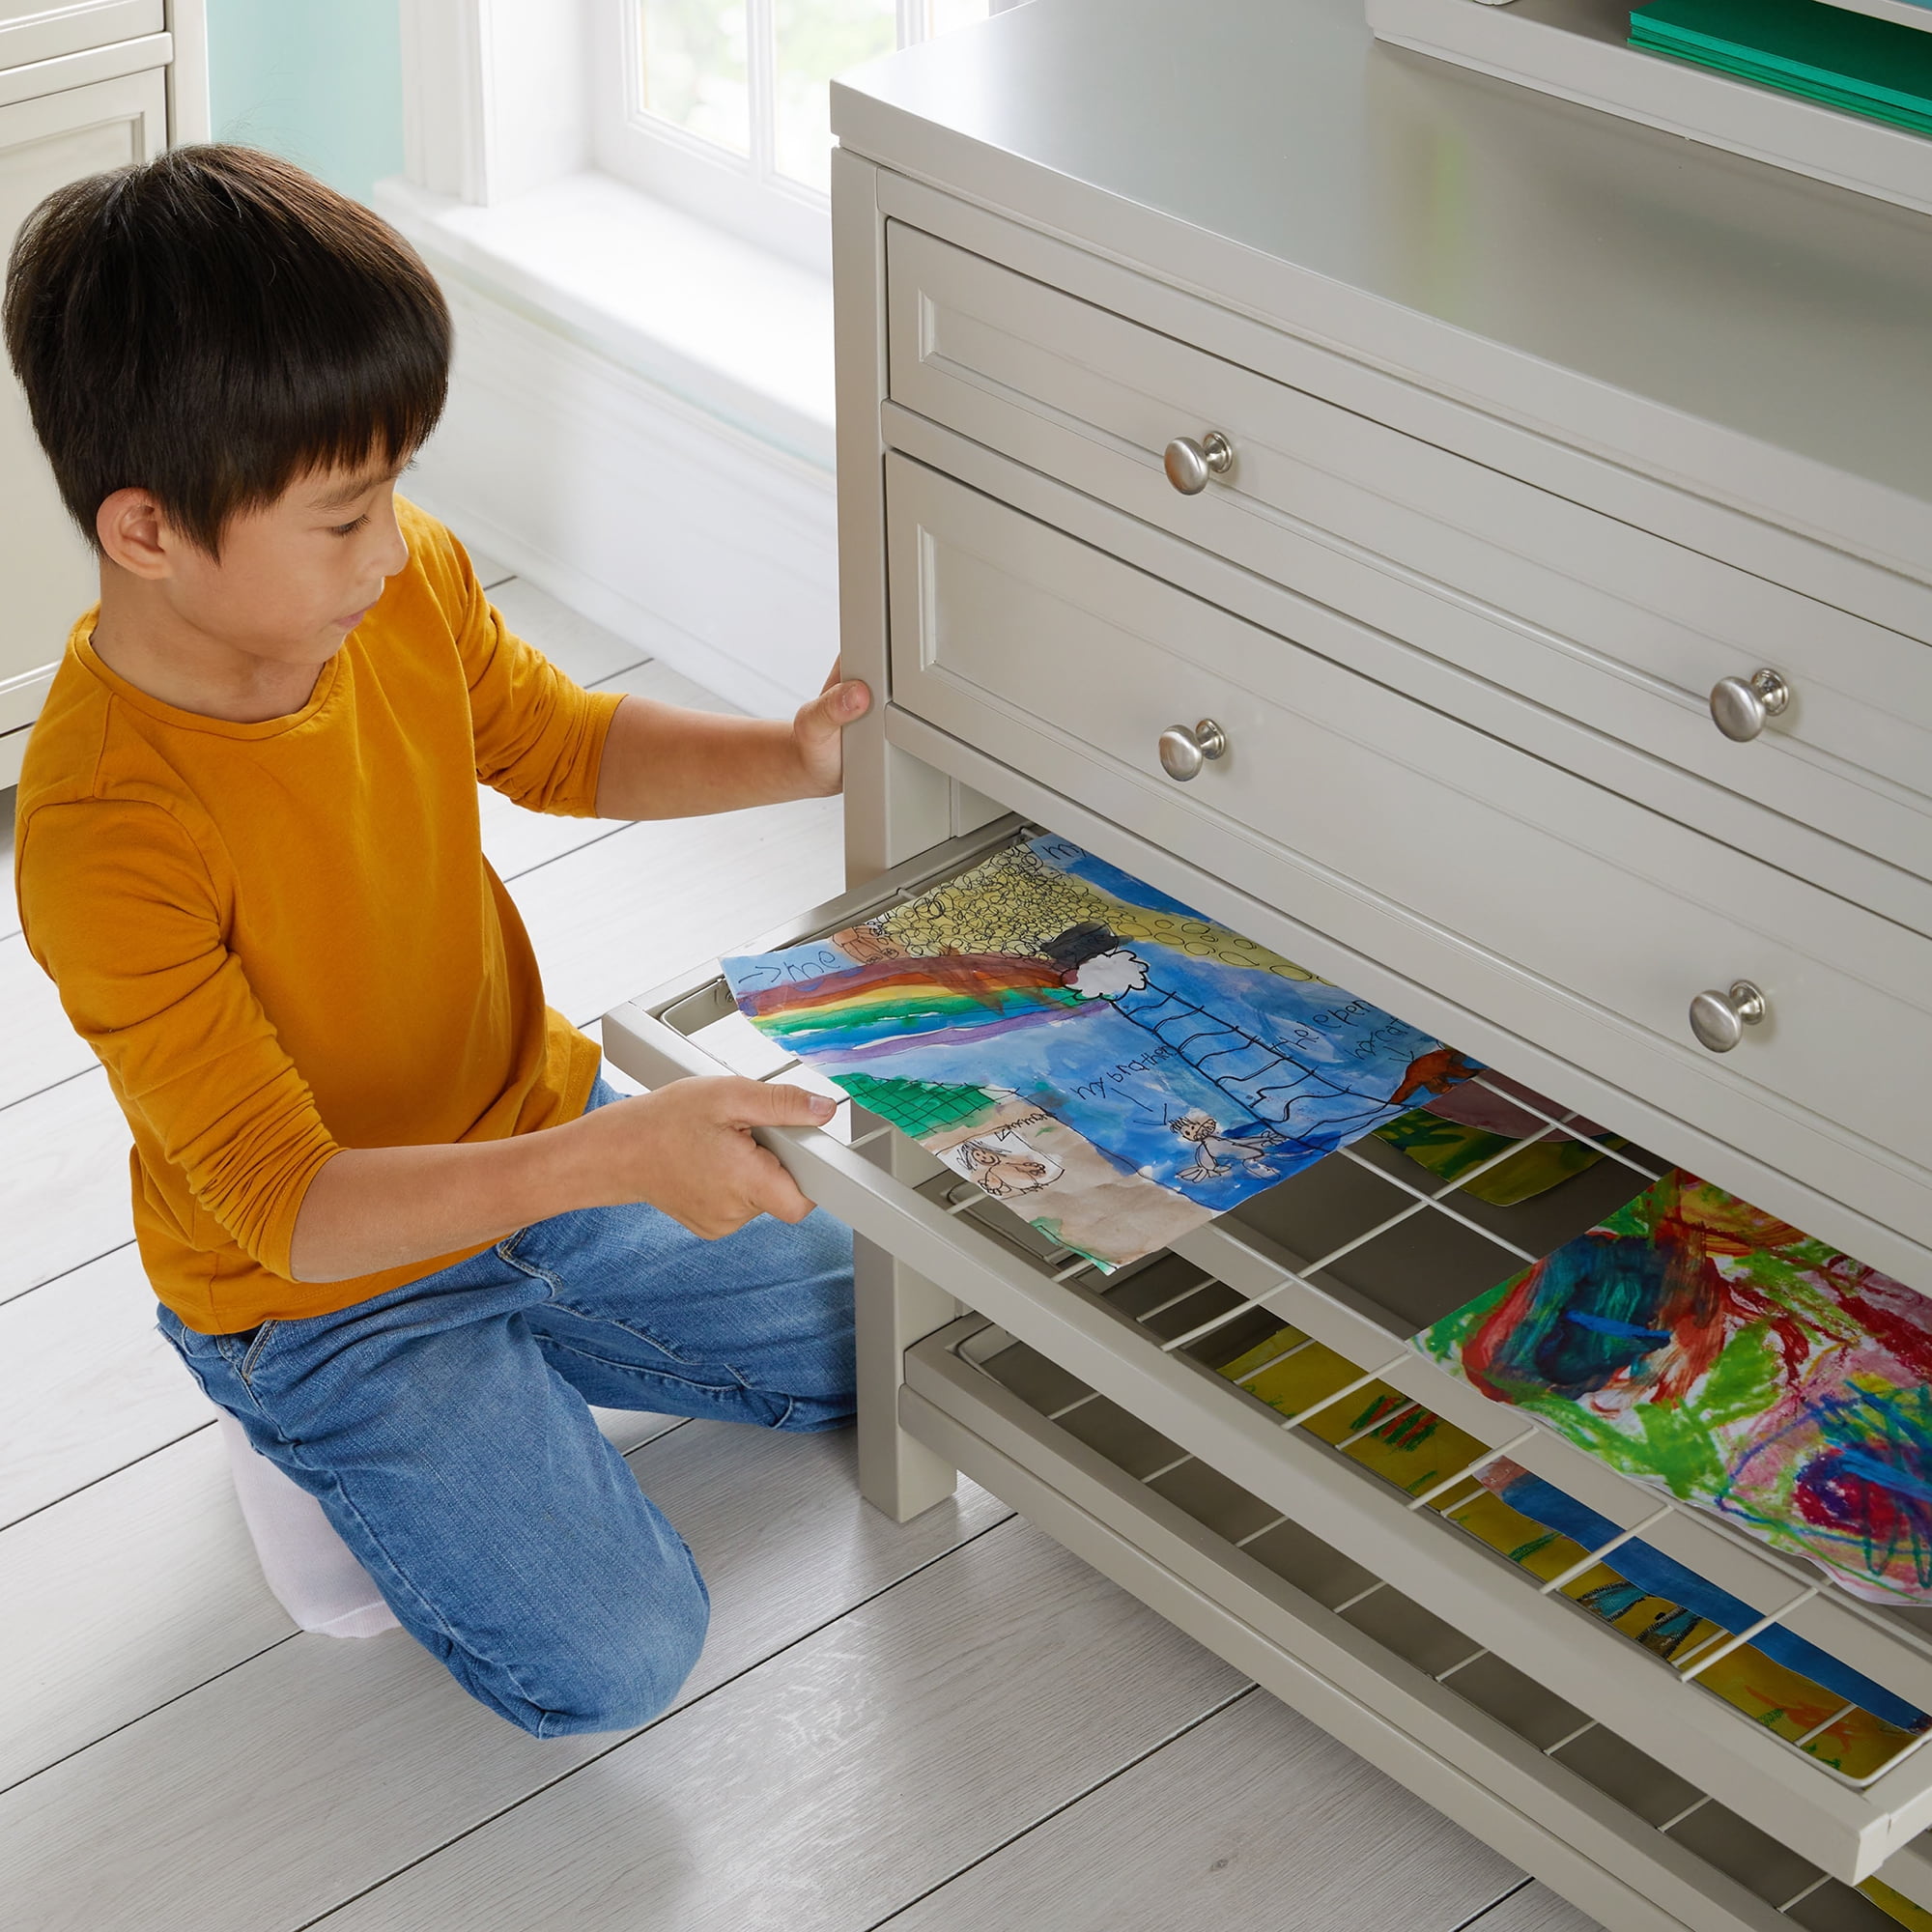 Martha Stewart Crafting Kids' Art Storage with Drying Racks - White